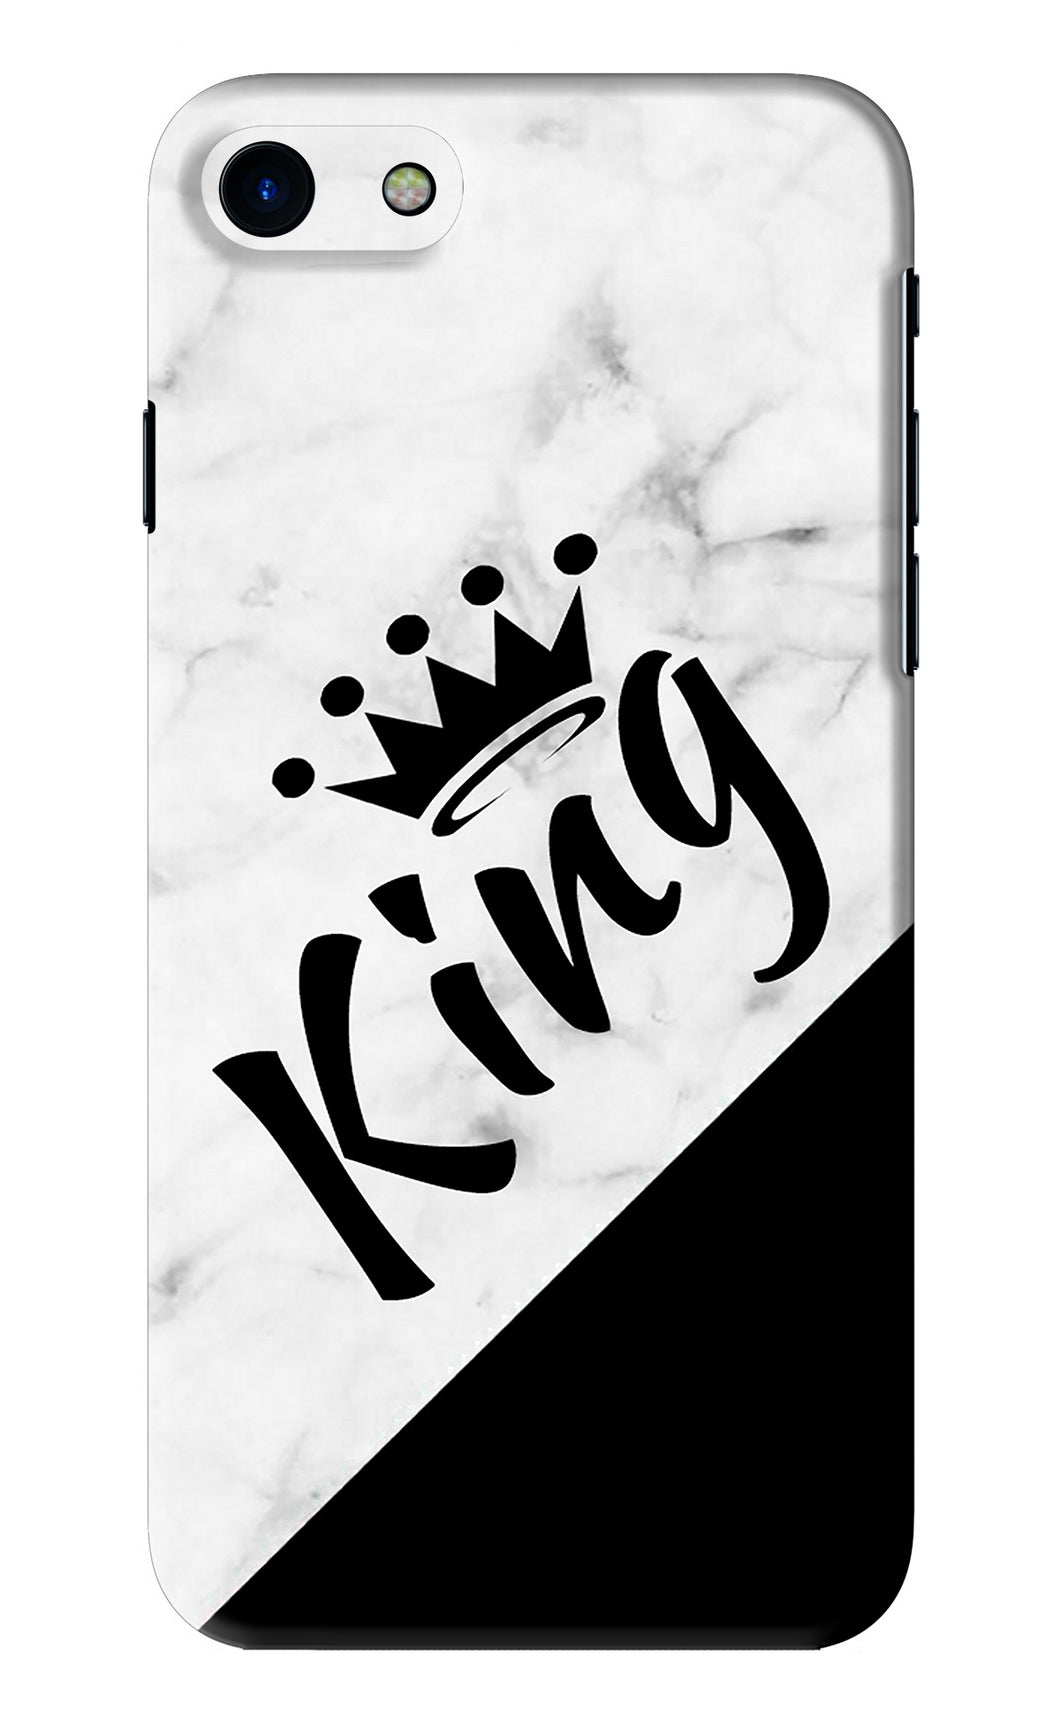 King iPhone 8 Back Skin Wrap